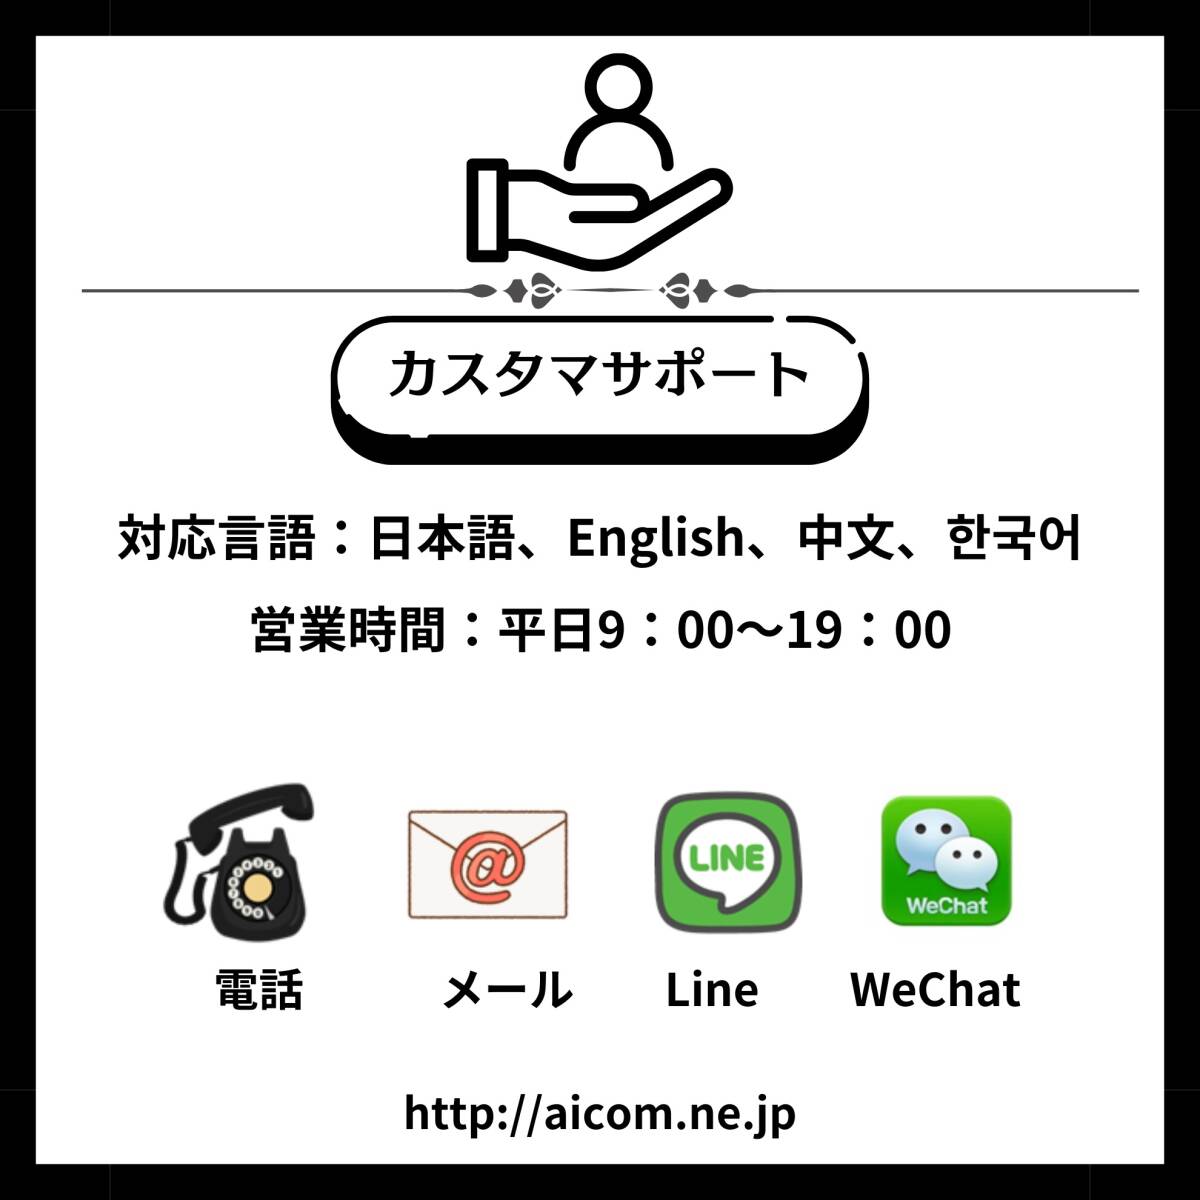 SIM for Japan Japan domestic for 180 days 10GB ( standard / micro / nano )3-in-1 docomo data communication exclusive use 4G-LTE SIM card /NTT DoCoMo communication net 